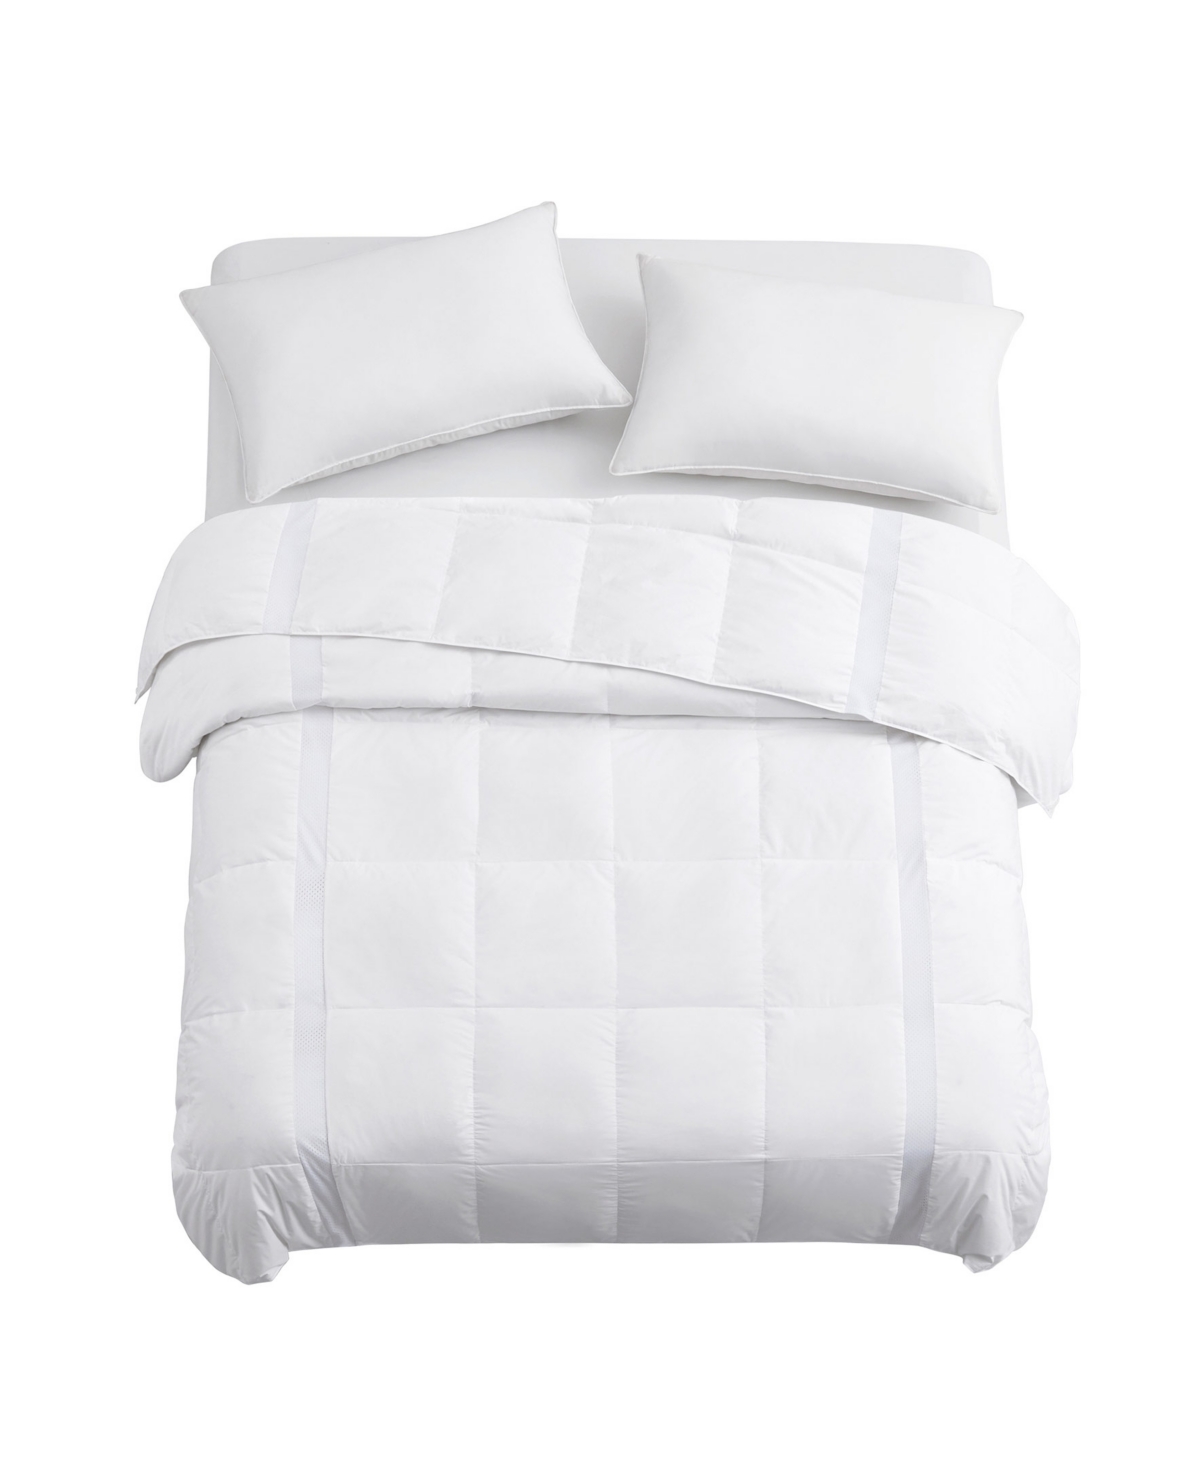 Unikome Ultra Lightweight Cooling Blanket White Down Comforter, Twin